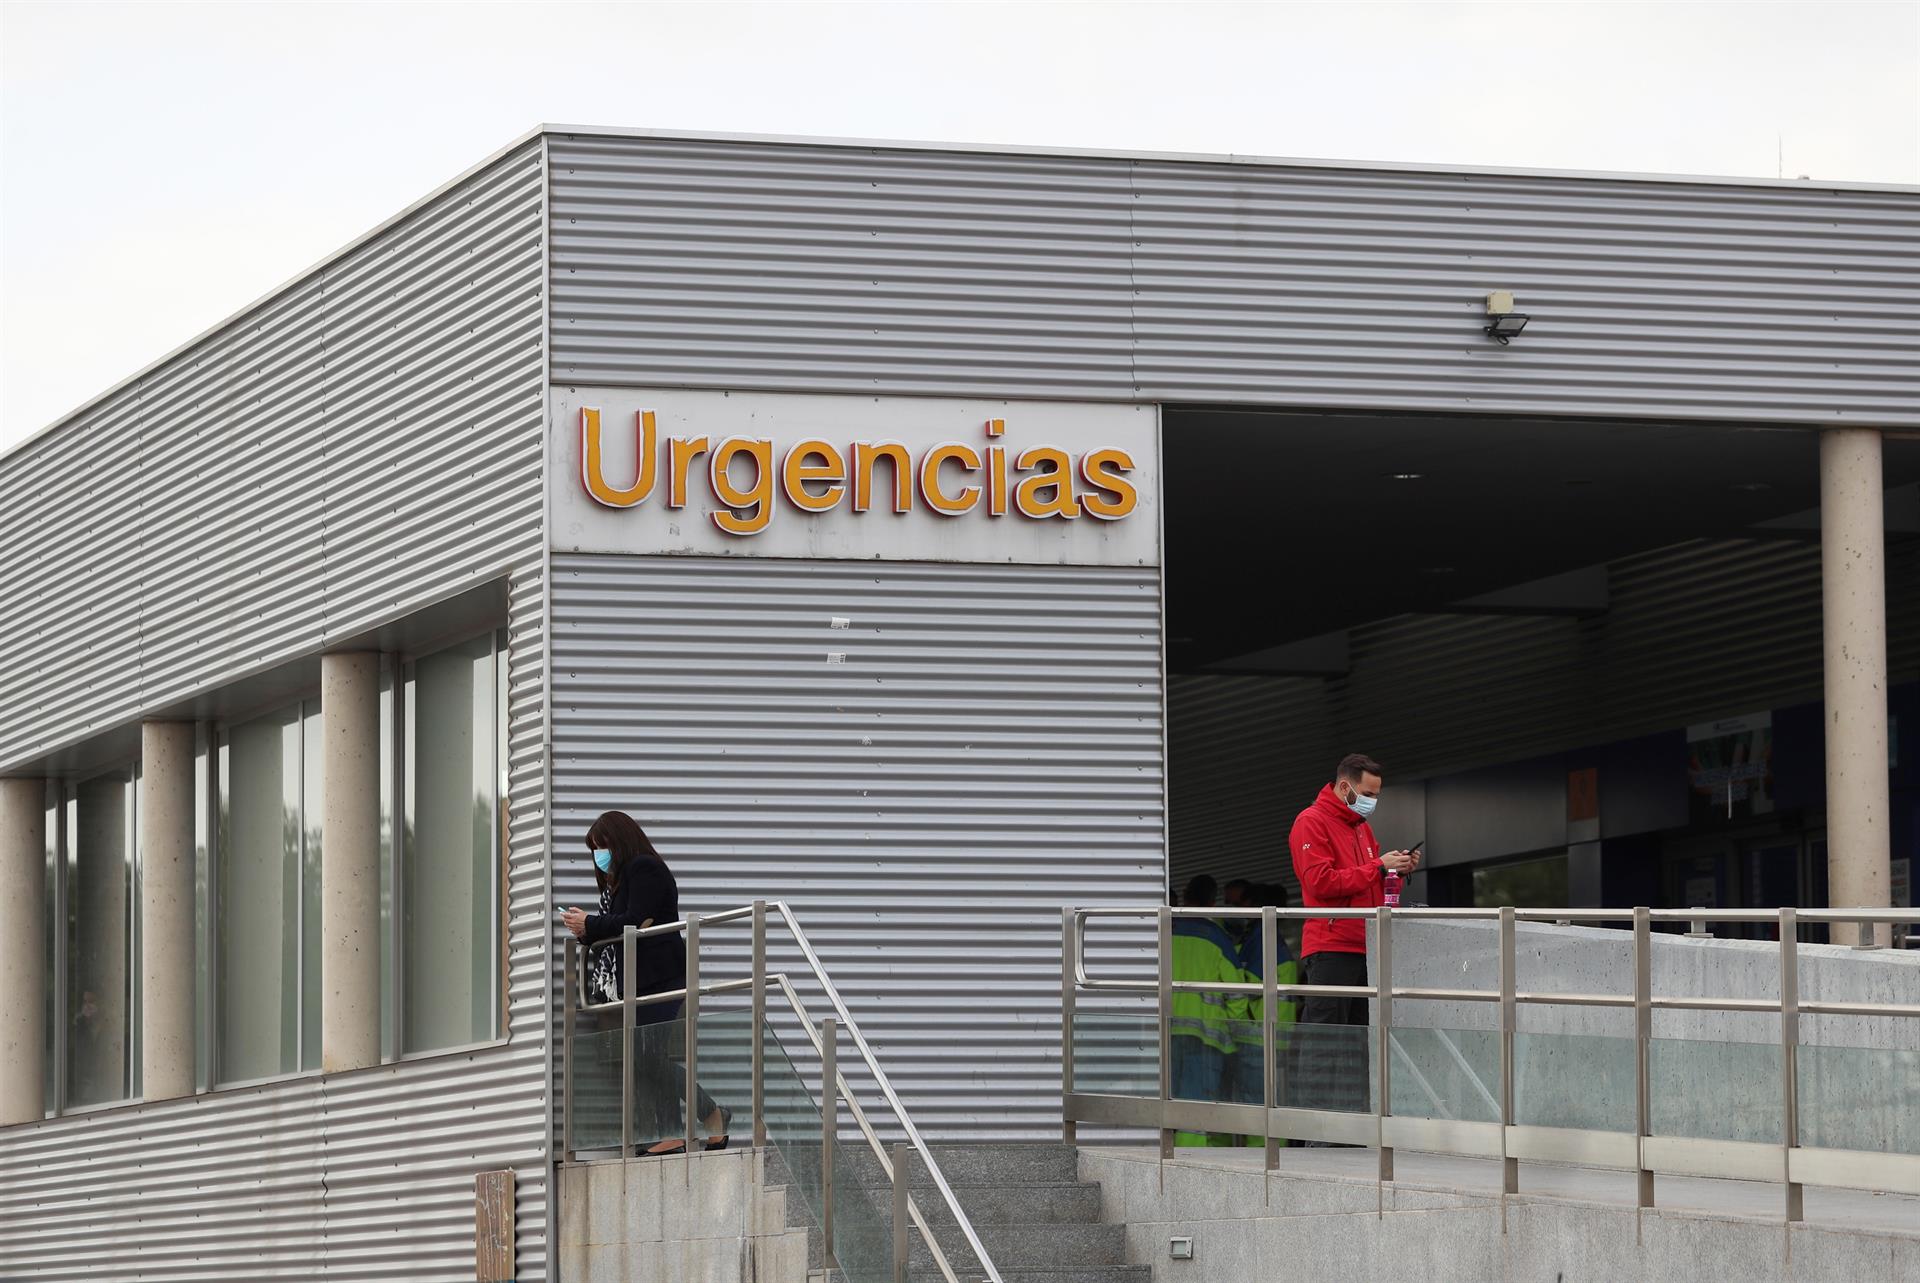 Entrada a Urgencias de un hospital. EFE/Rodrigo Jiménez/Archivo